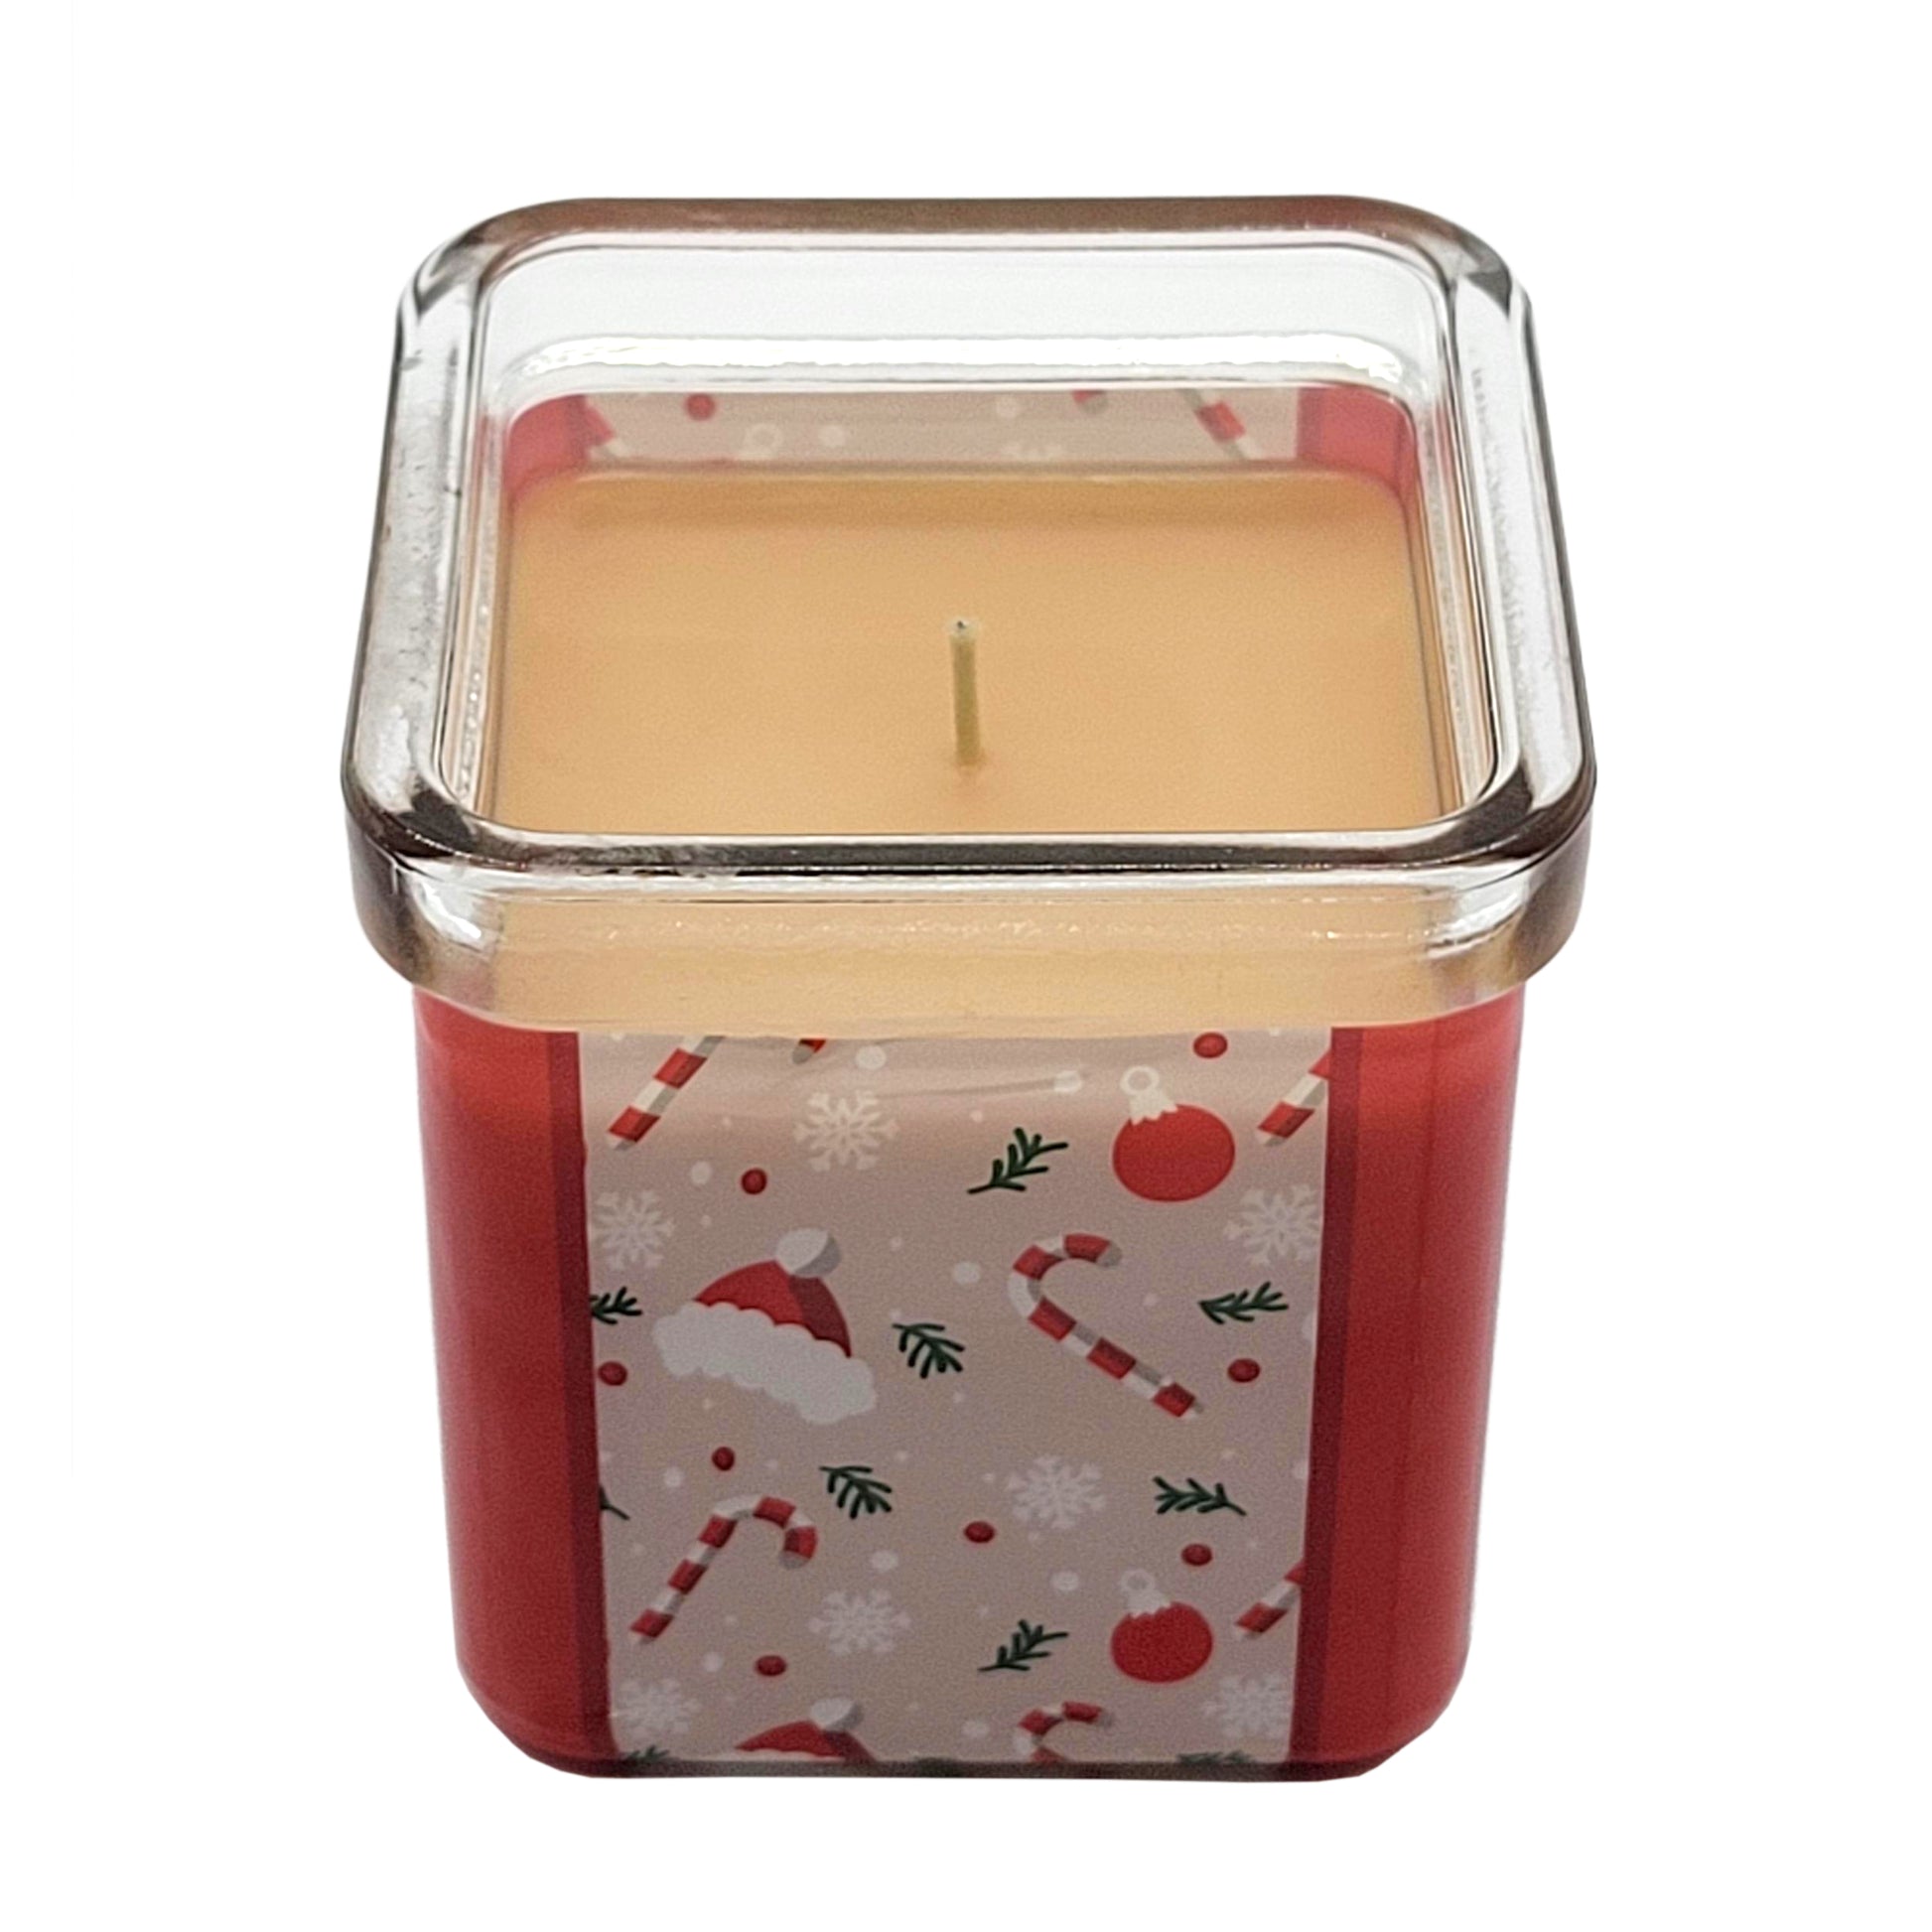 Oatmeal Raisin Cookie Scented Candle - Mini Gift 6oz